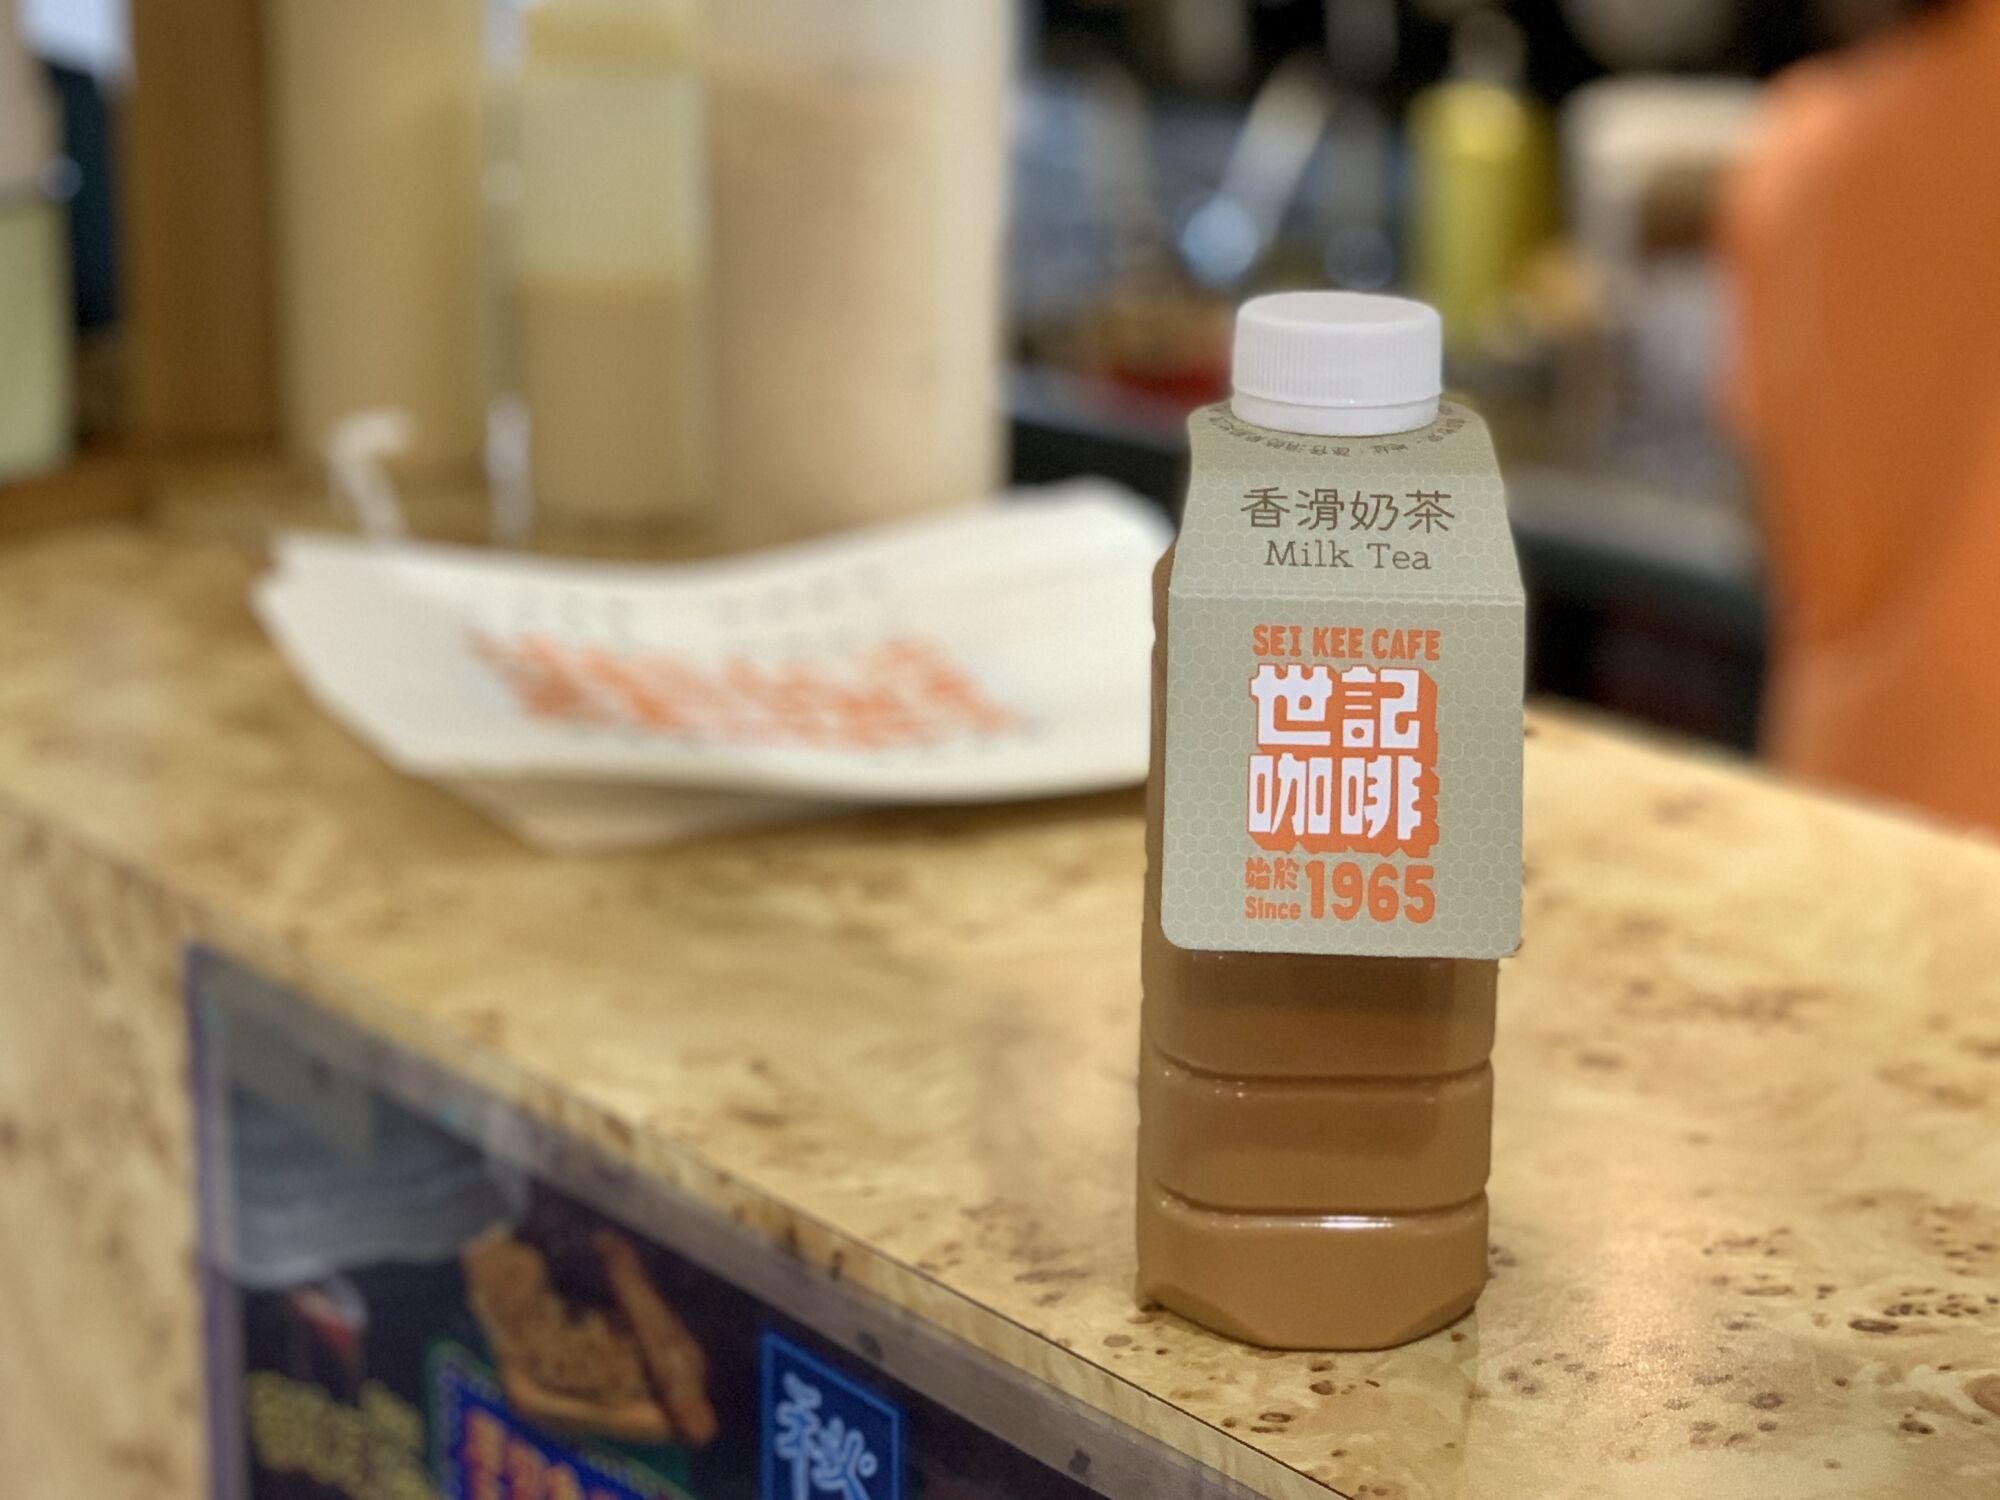 Sei Kee Cafe Milk Tea Bottle on the Counter Macau Lifestyle